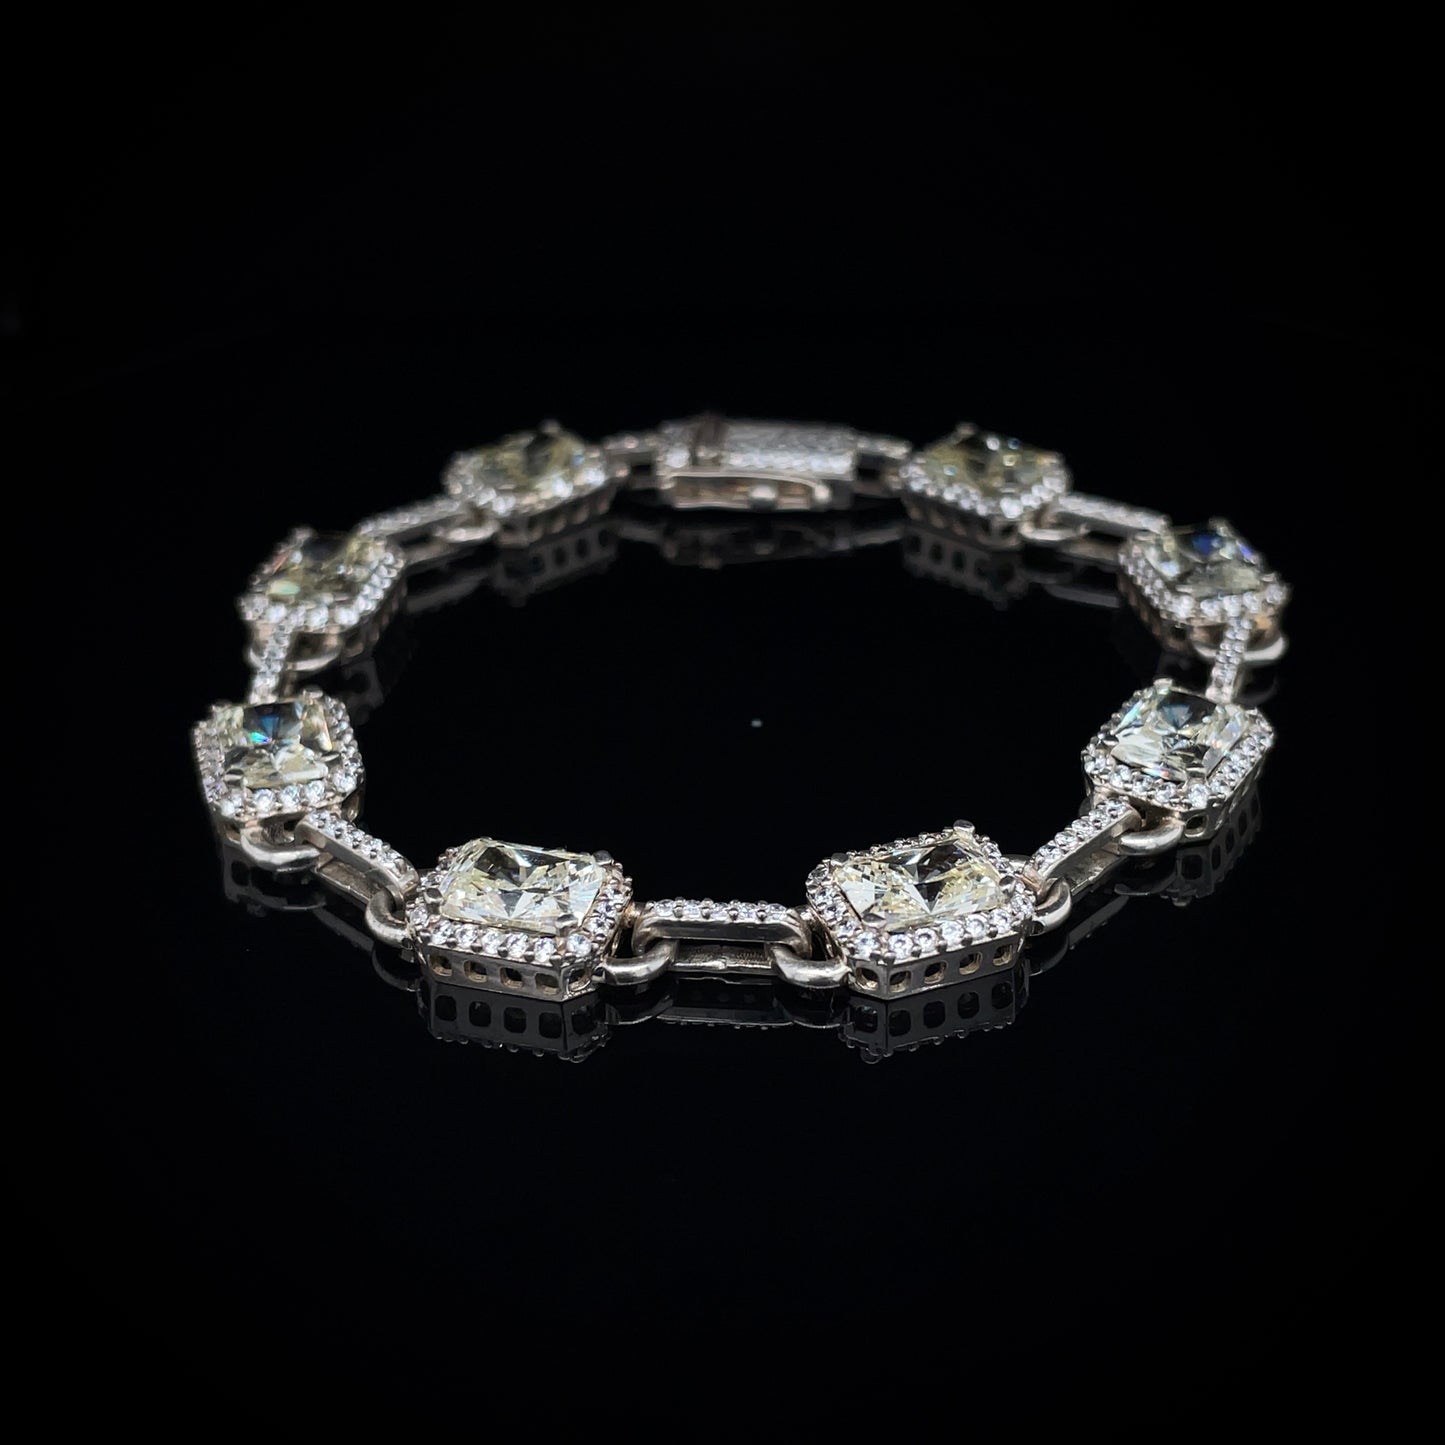 Emerald Cut Gemstone Bracelet